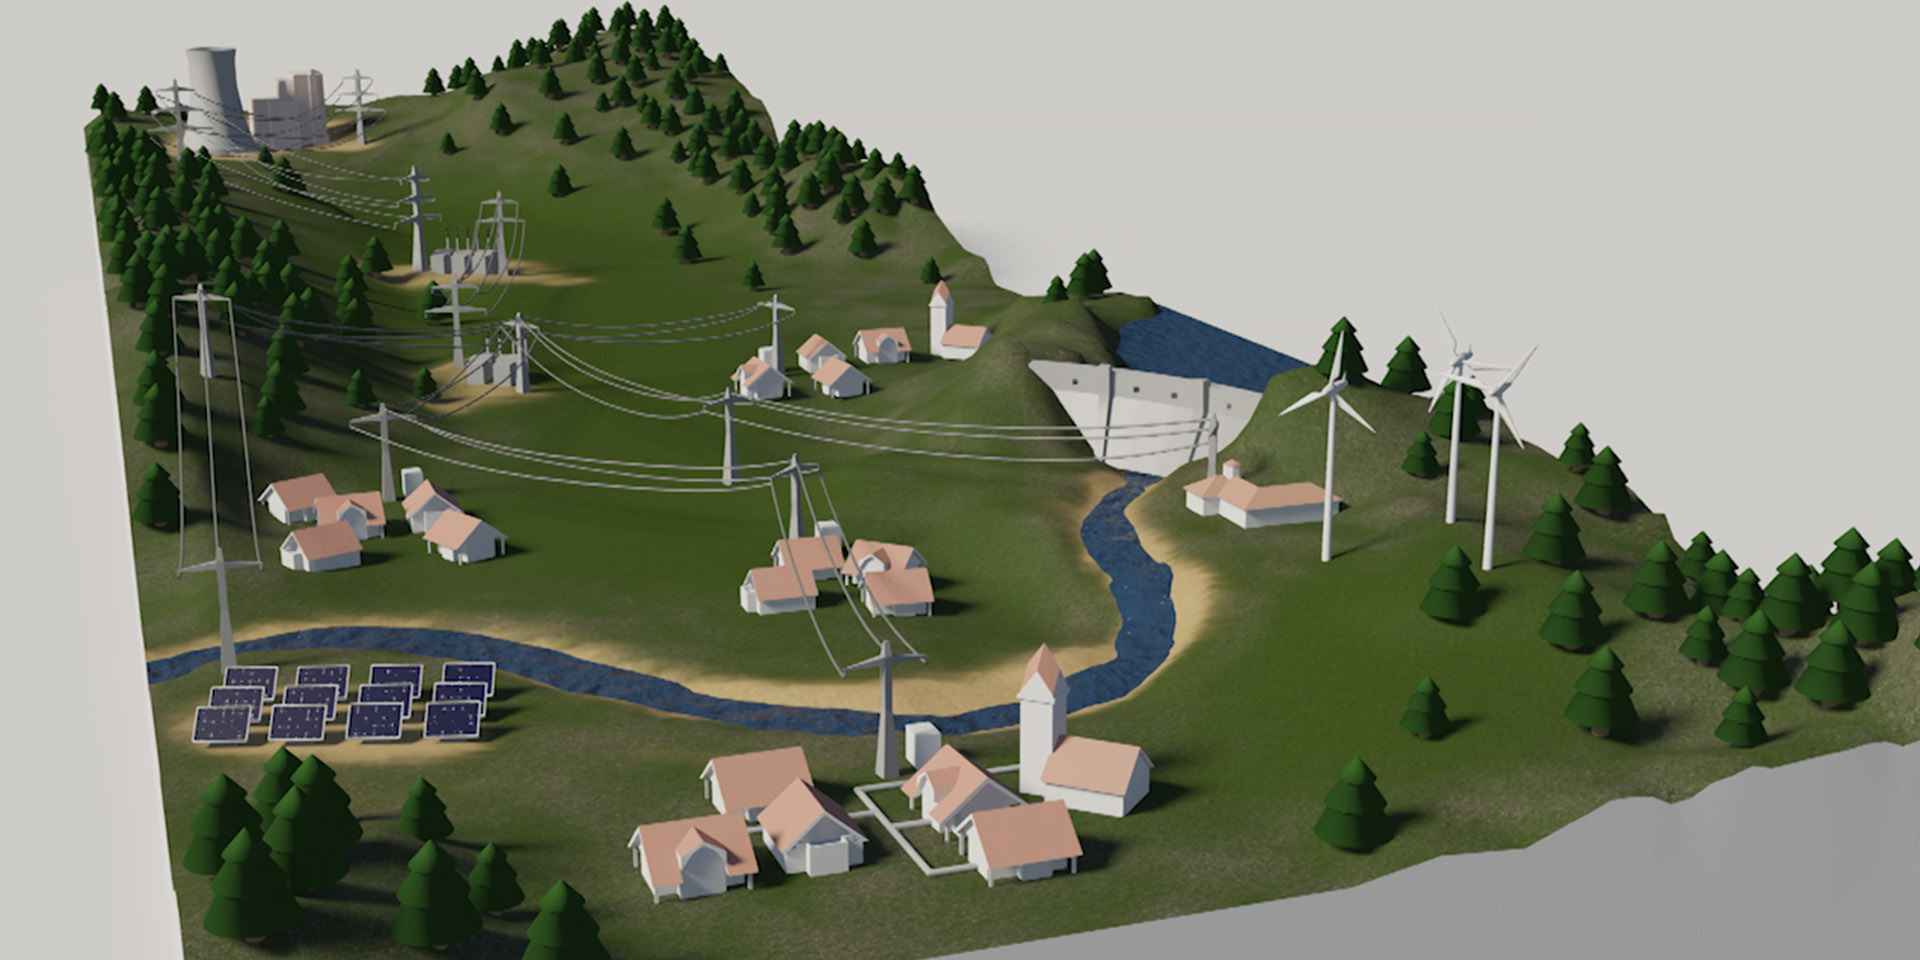 OVAG Netz AG | "Strom - Energie mit Zukunft" | Commercial Documentary